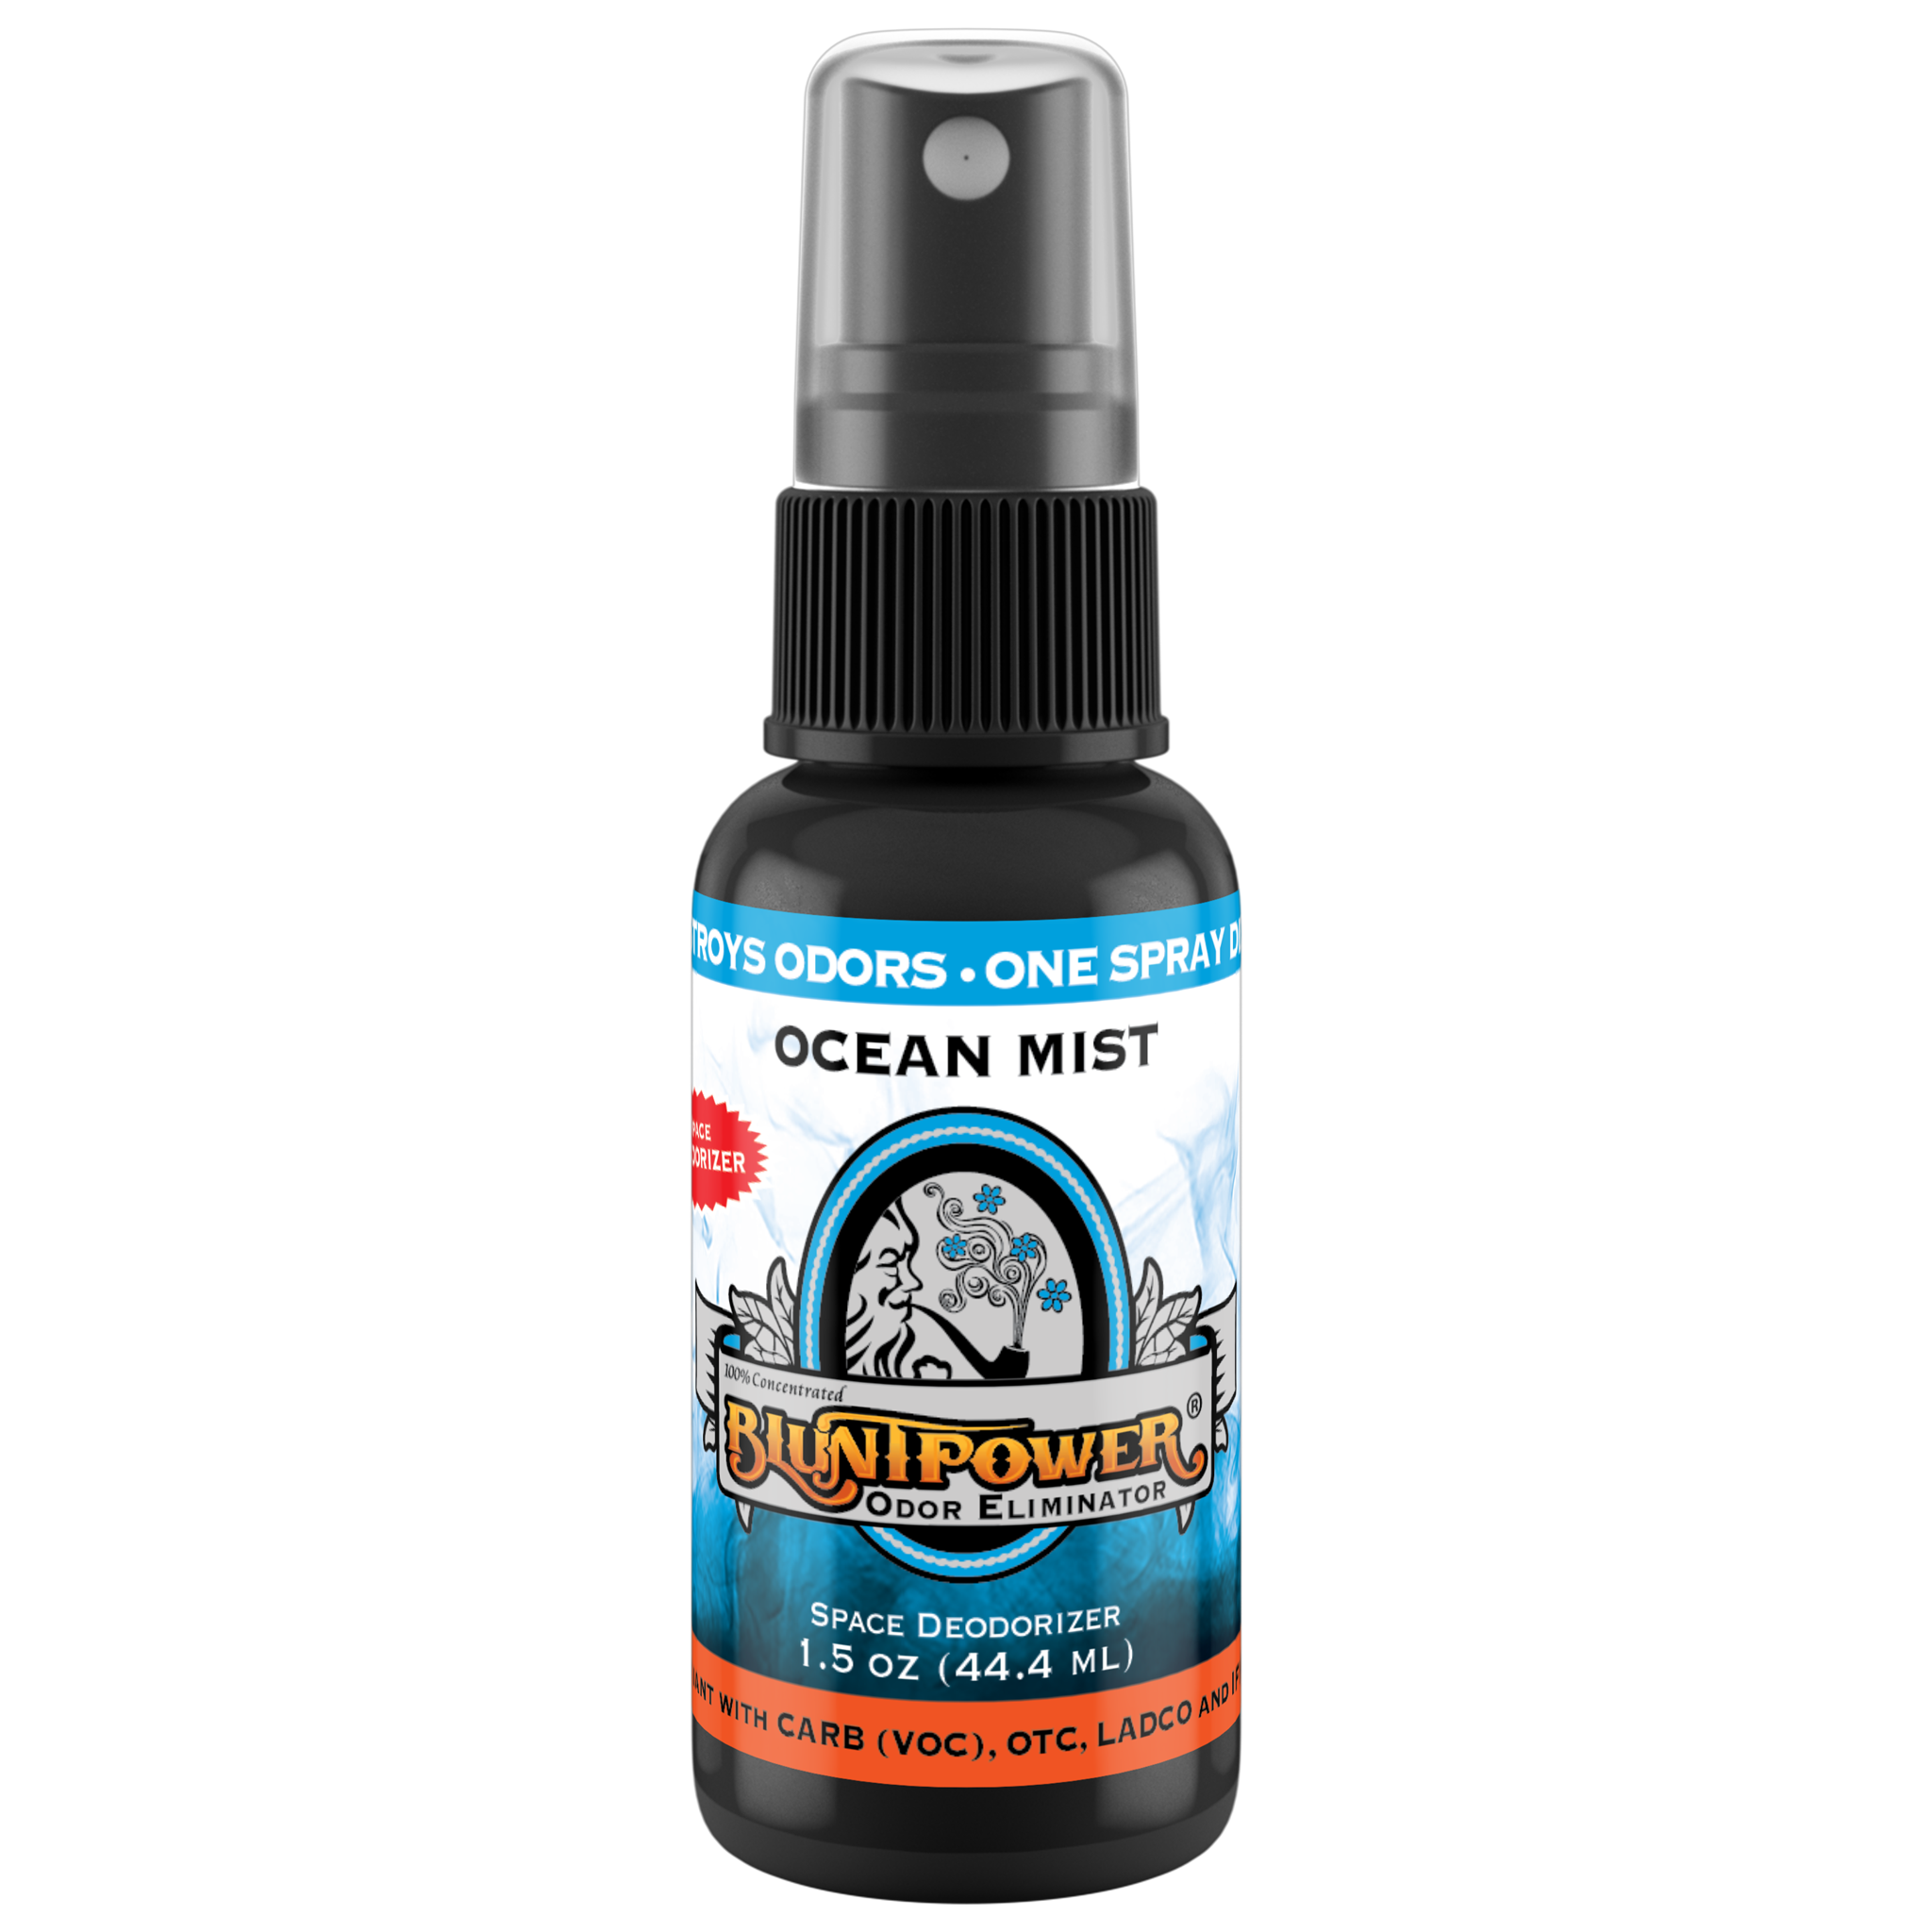 BluntPower Odor Eliminator - Ocean Mist Scent Size: 1.5 fl oz